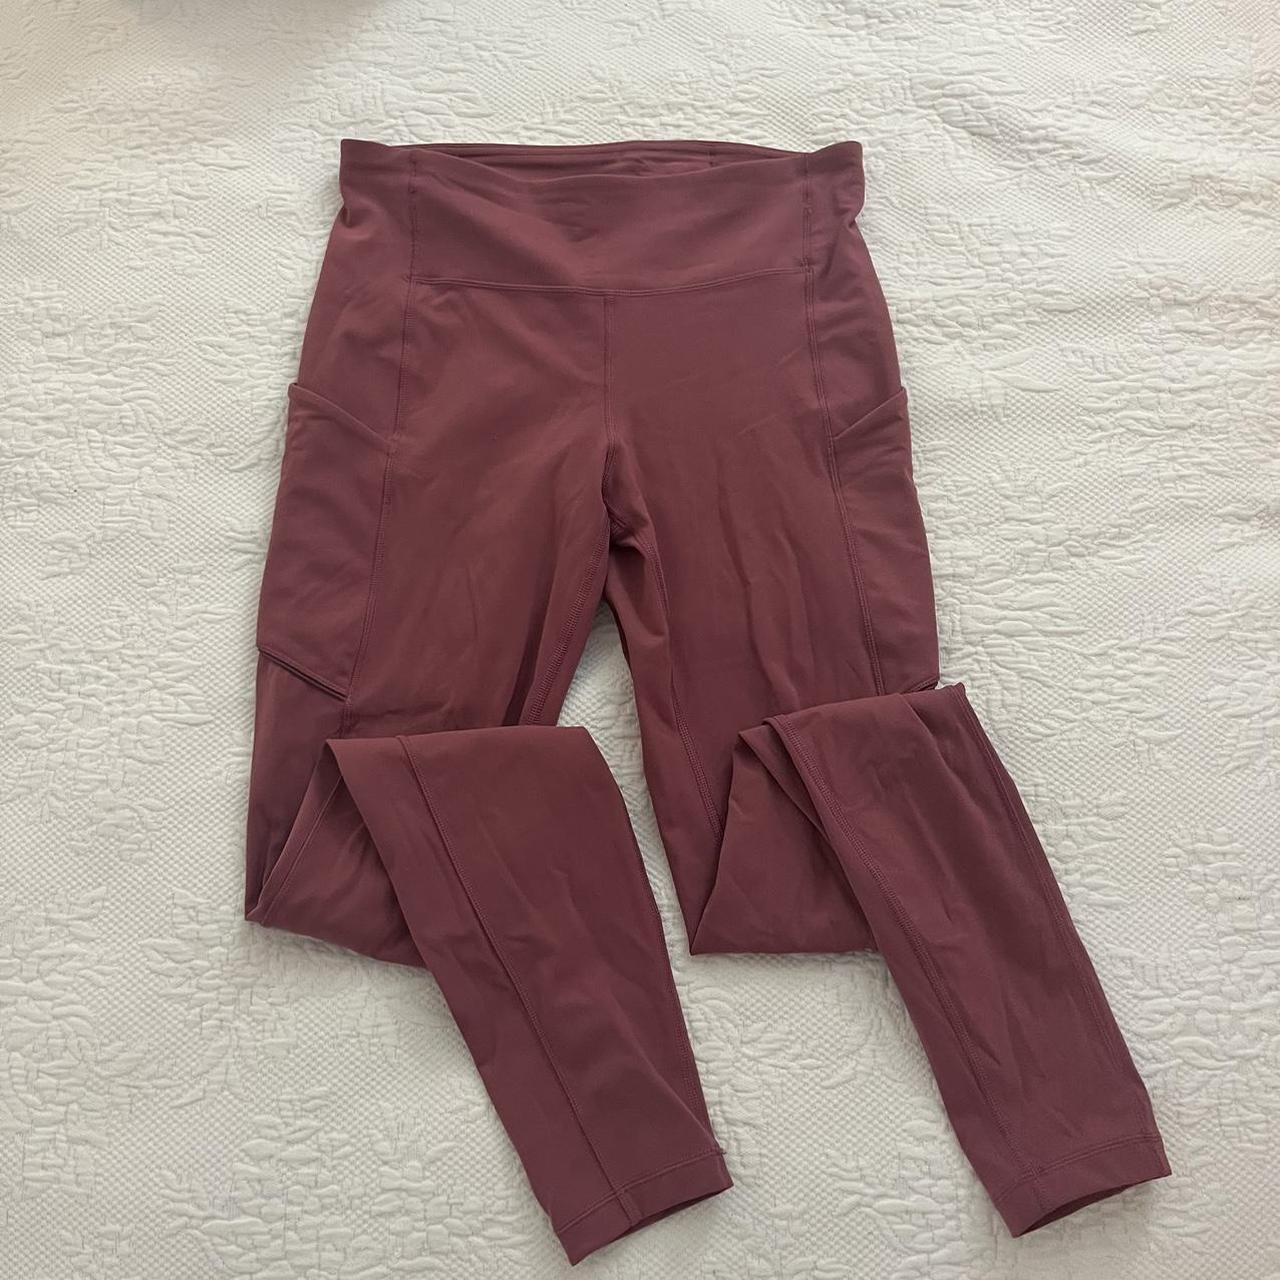 lululemon dark pink leggings, great condition, size